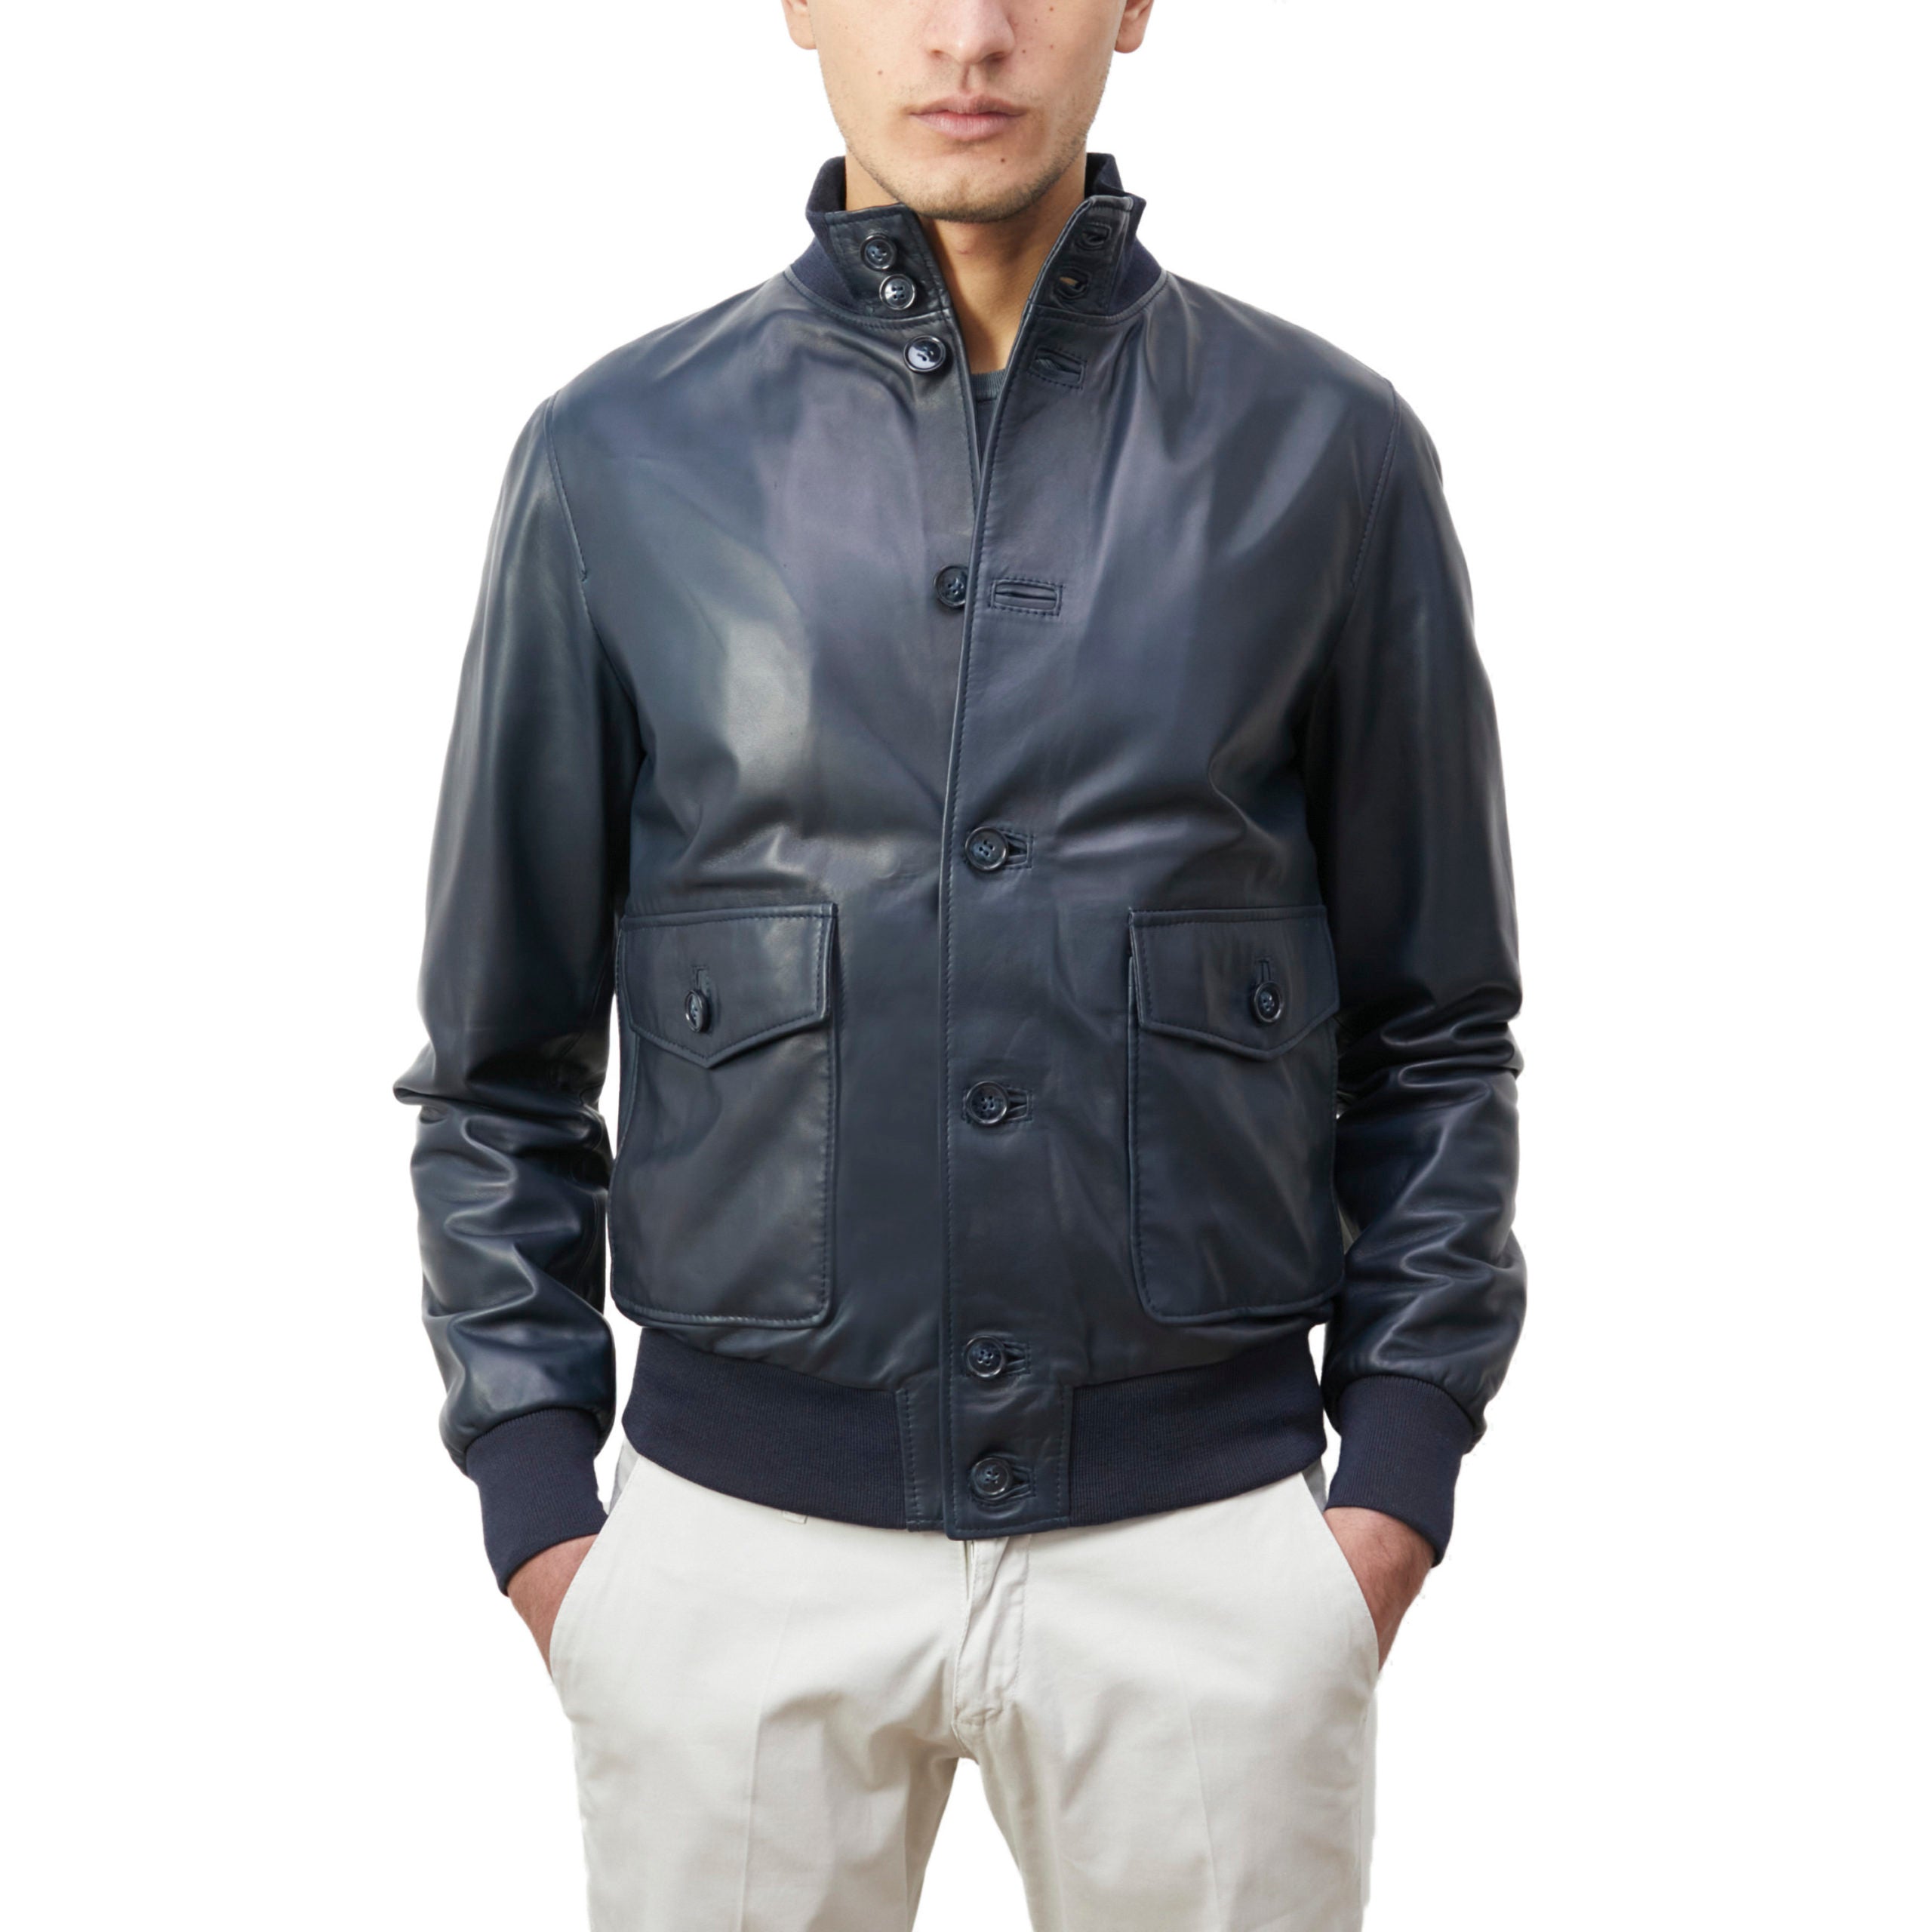 98PTABL leather jacket